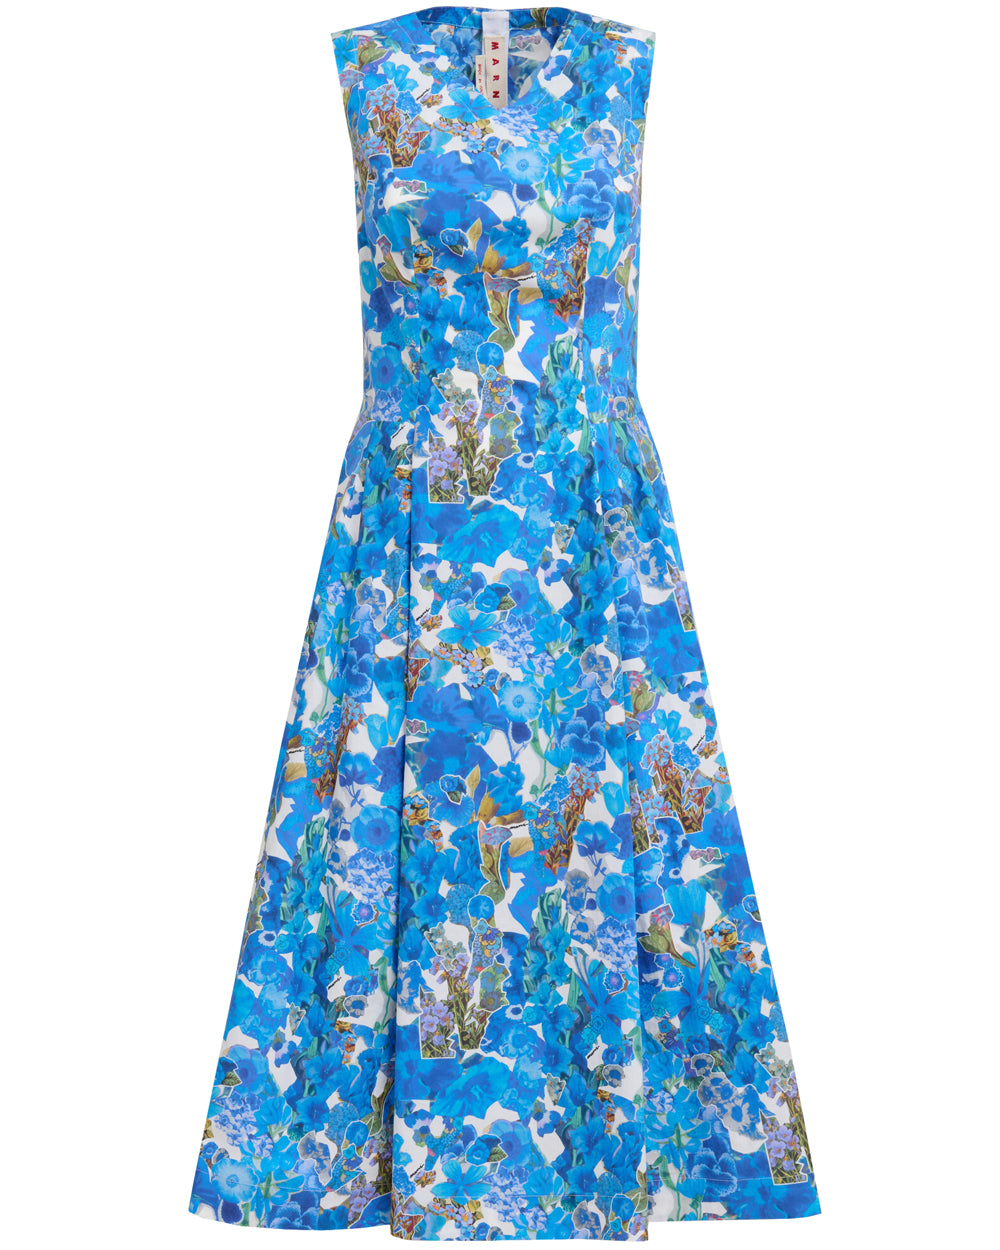 Cobalt Floral Print Aline Dress